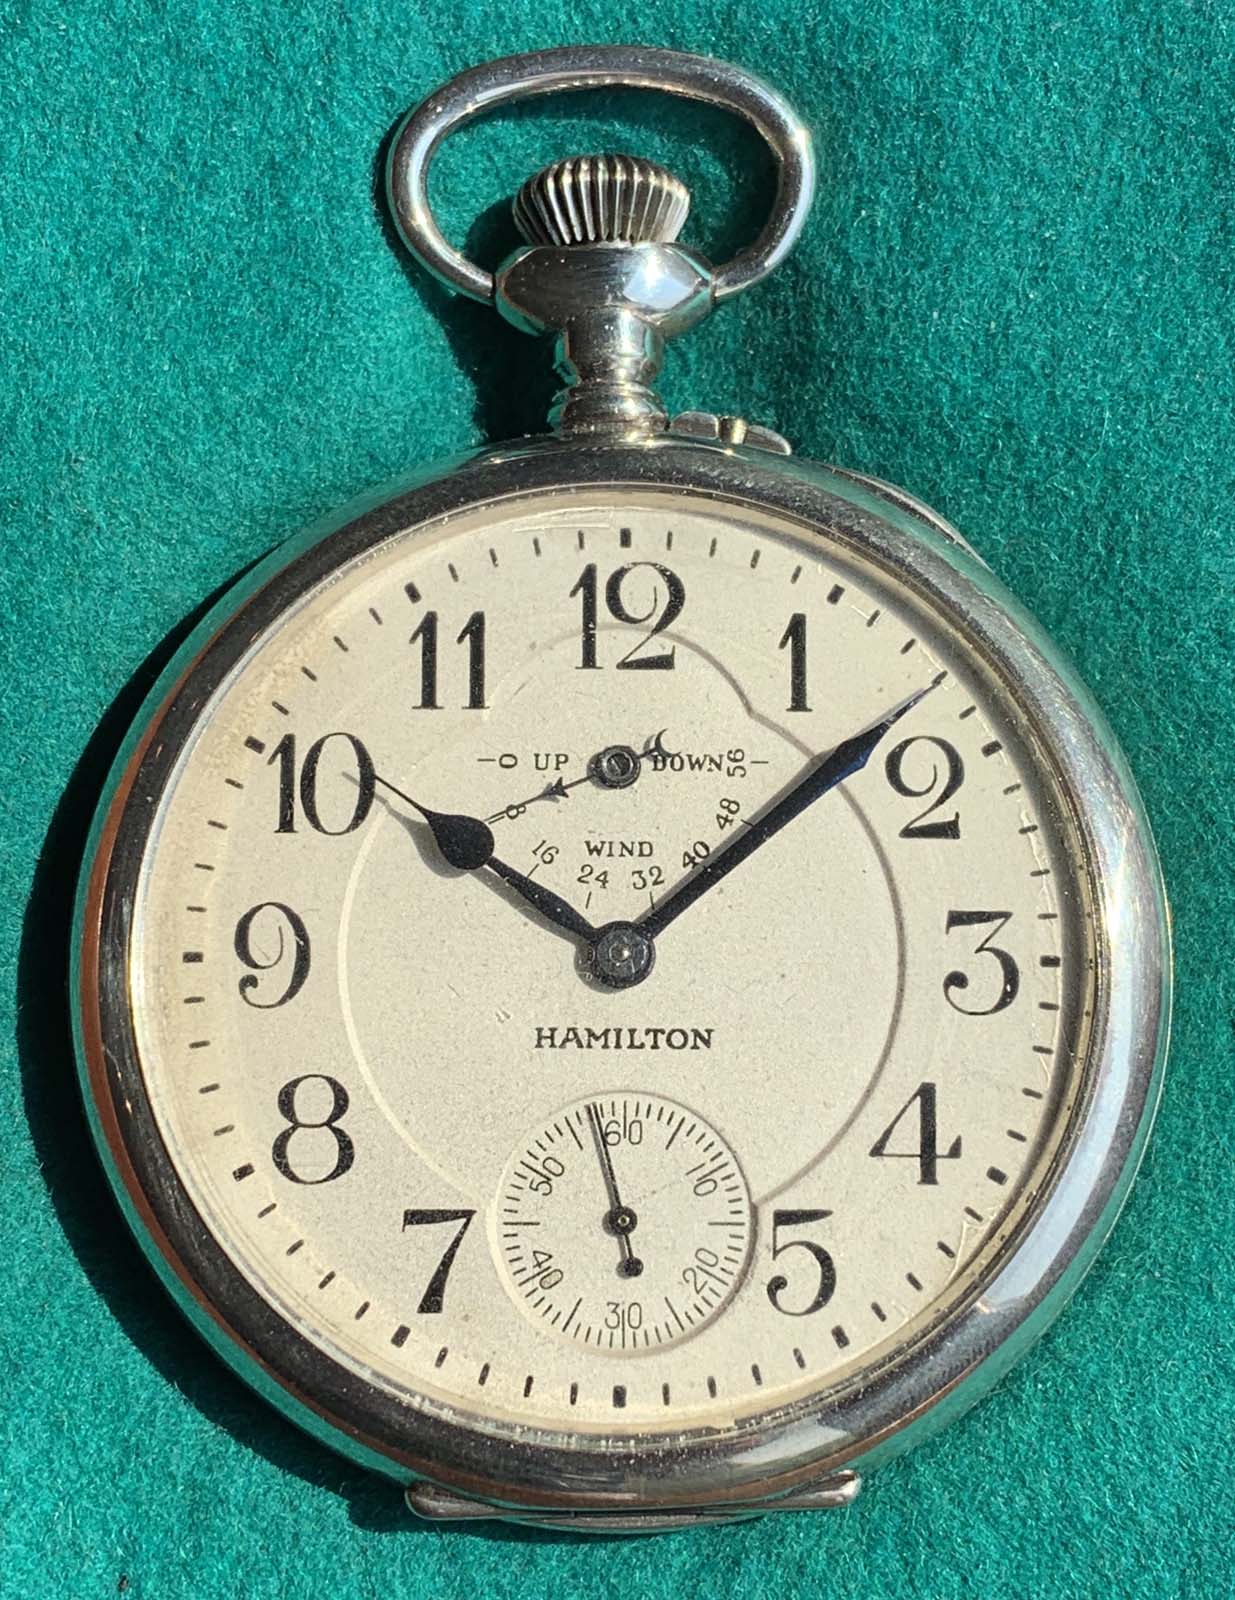 Hamilton 36-size Chronometer Watch